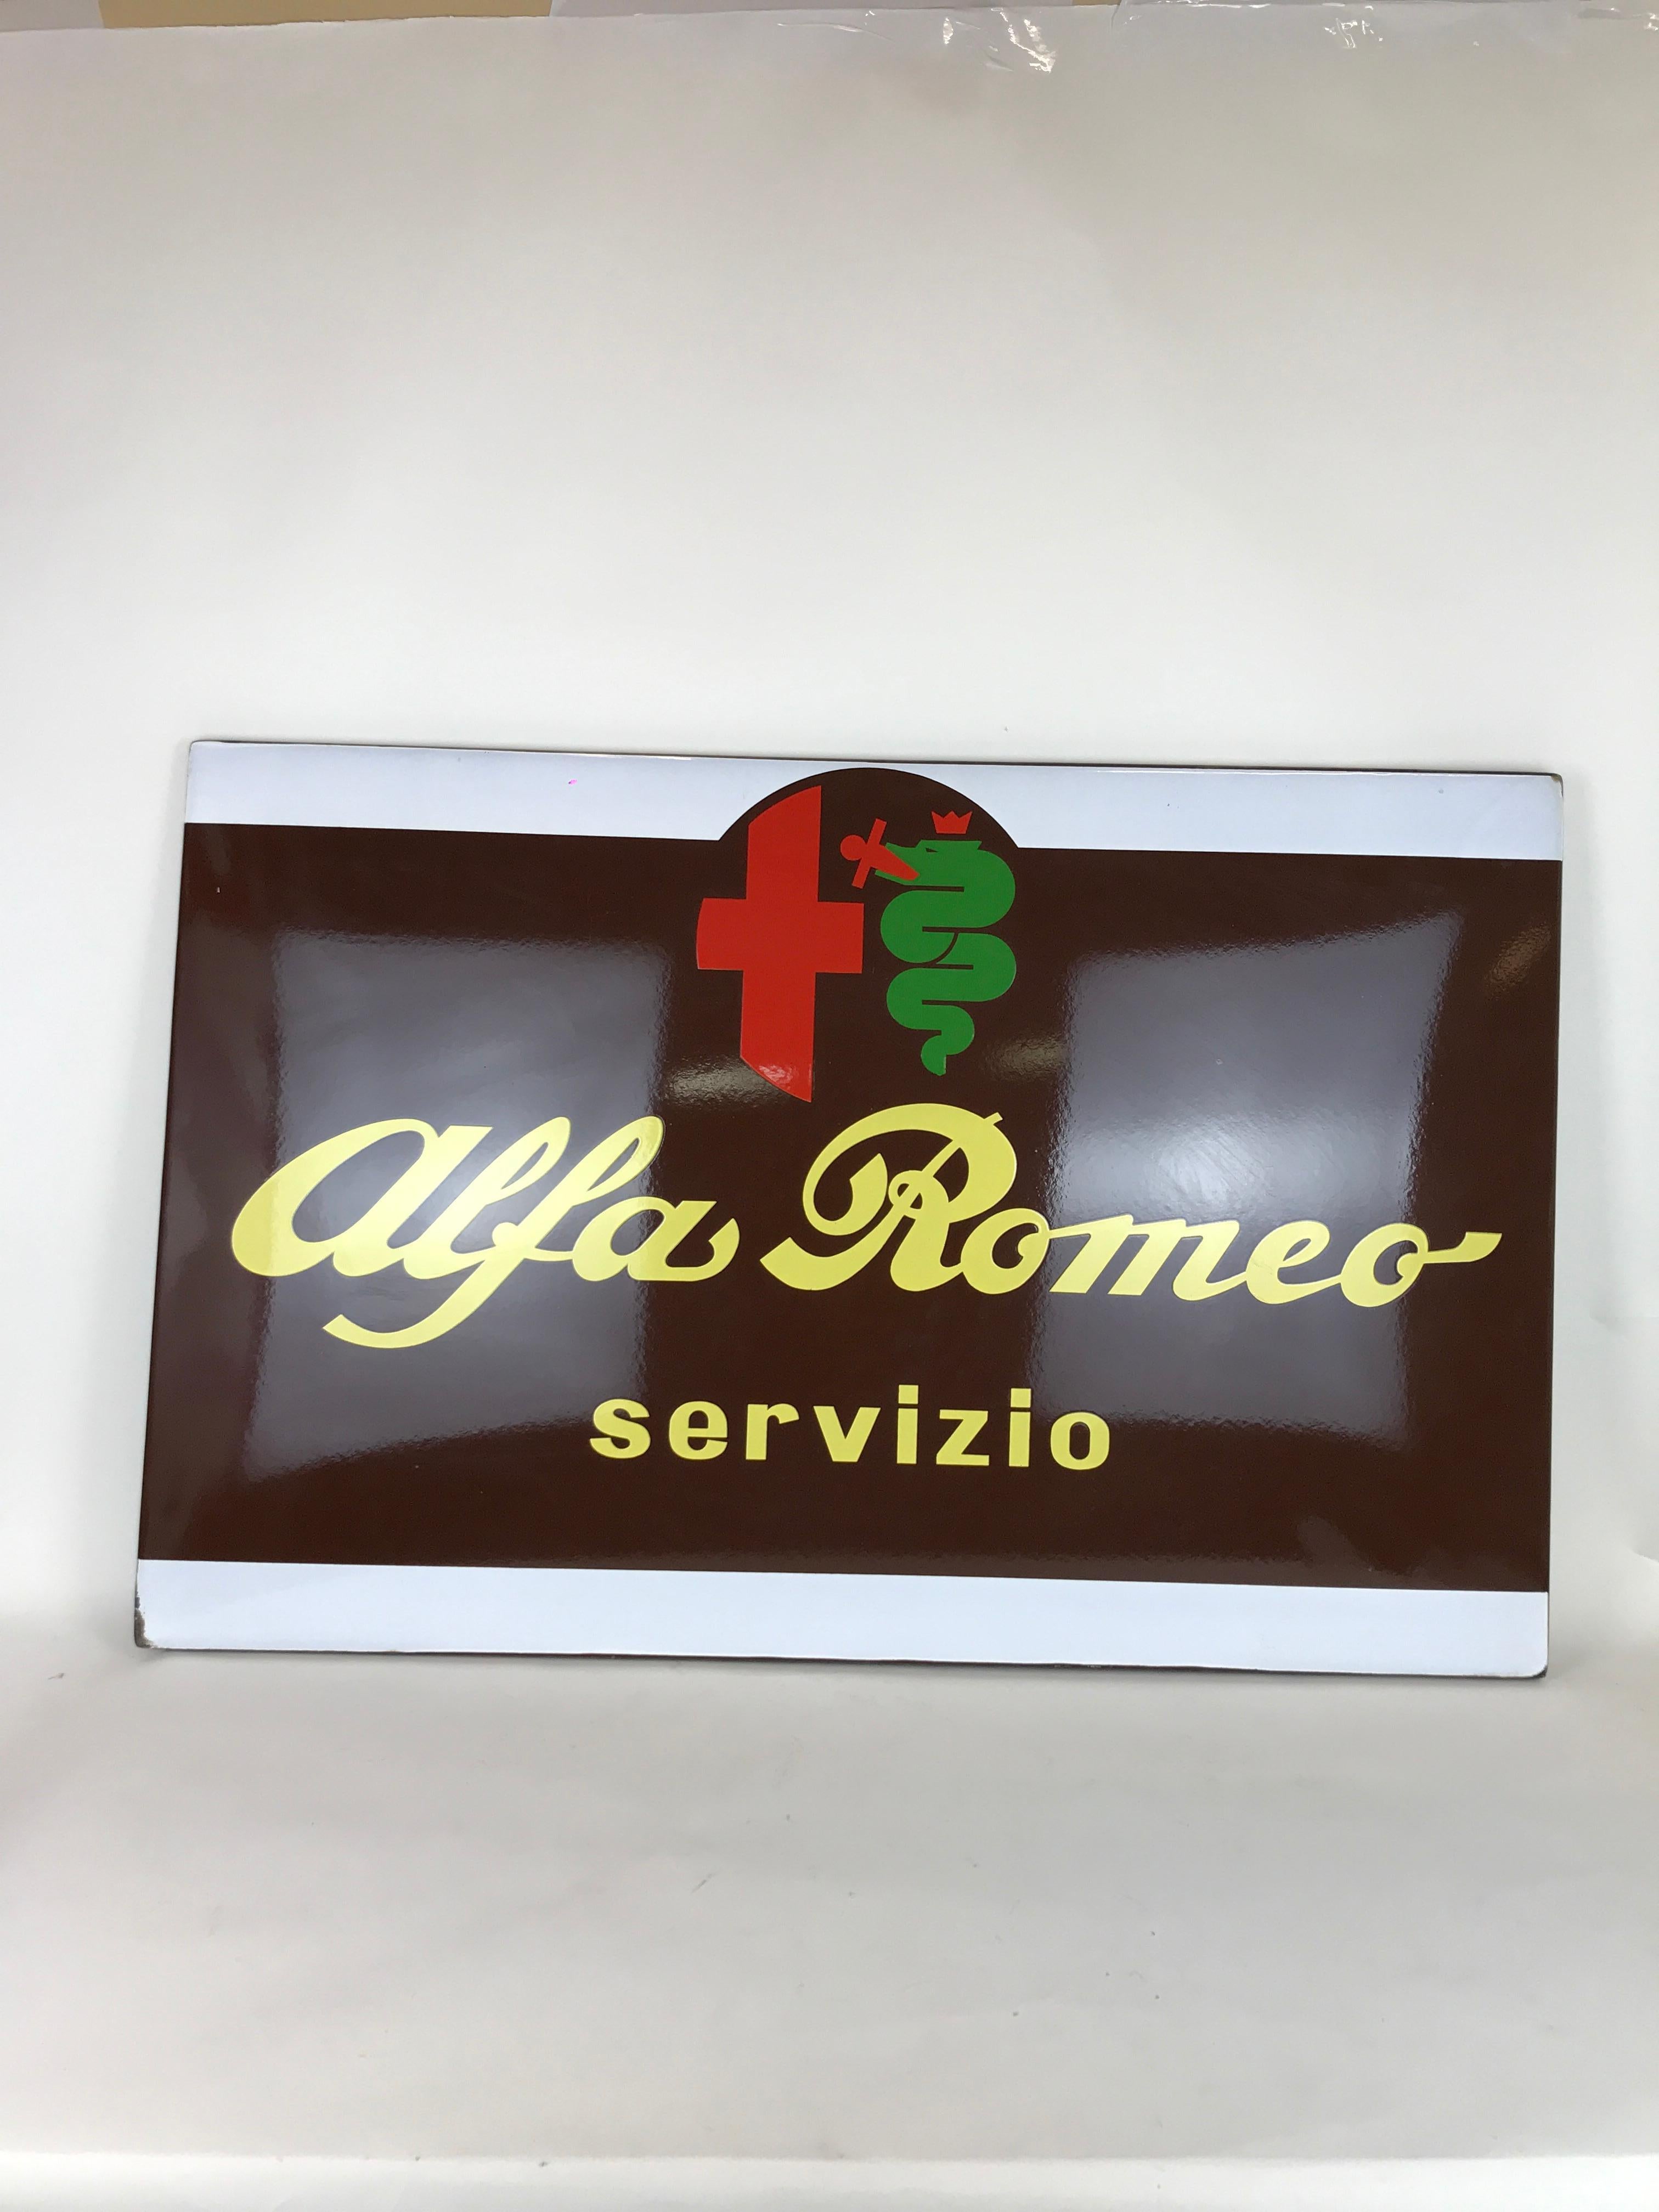 Mid-Century Modern 1960s Italian Vintage Metal Enamel Alfa Romeo Servizio Advertising Sign